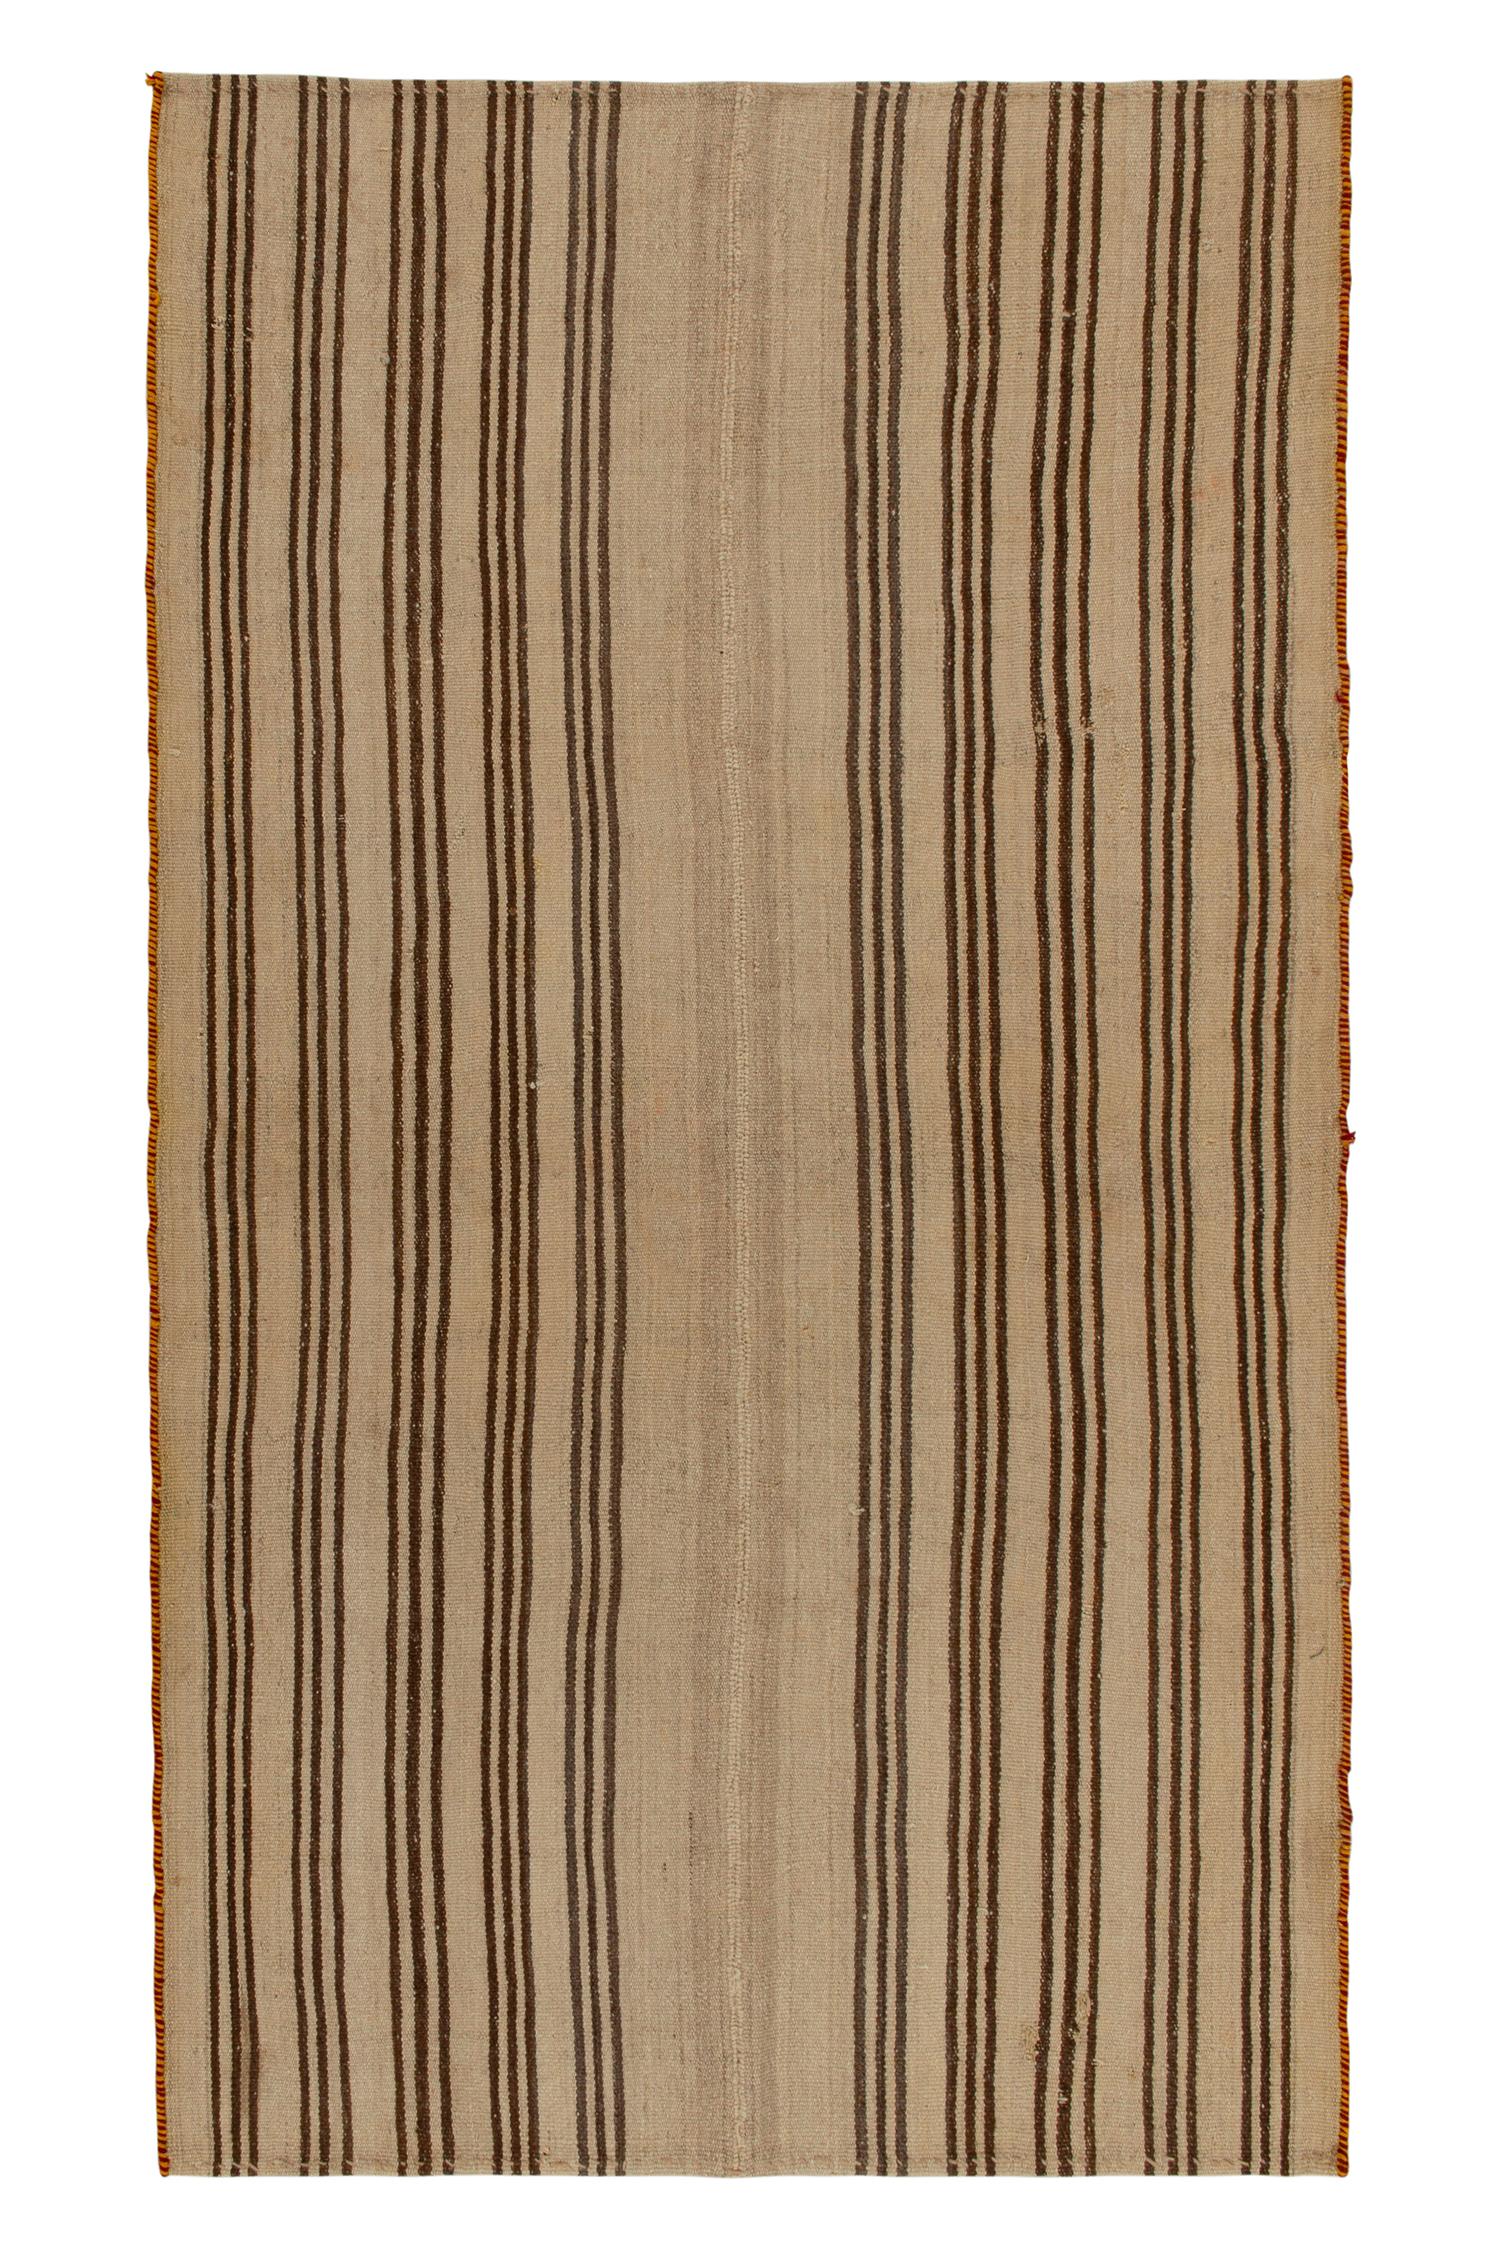 Vintage Kilim rug with Beige-Brown Stripe Patterns, Panel-Woven by Rug & Kilim For Sale